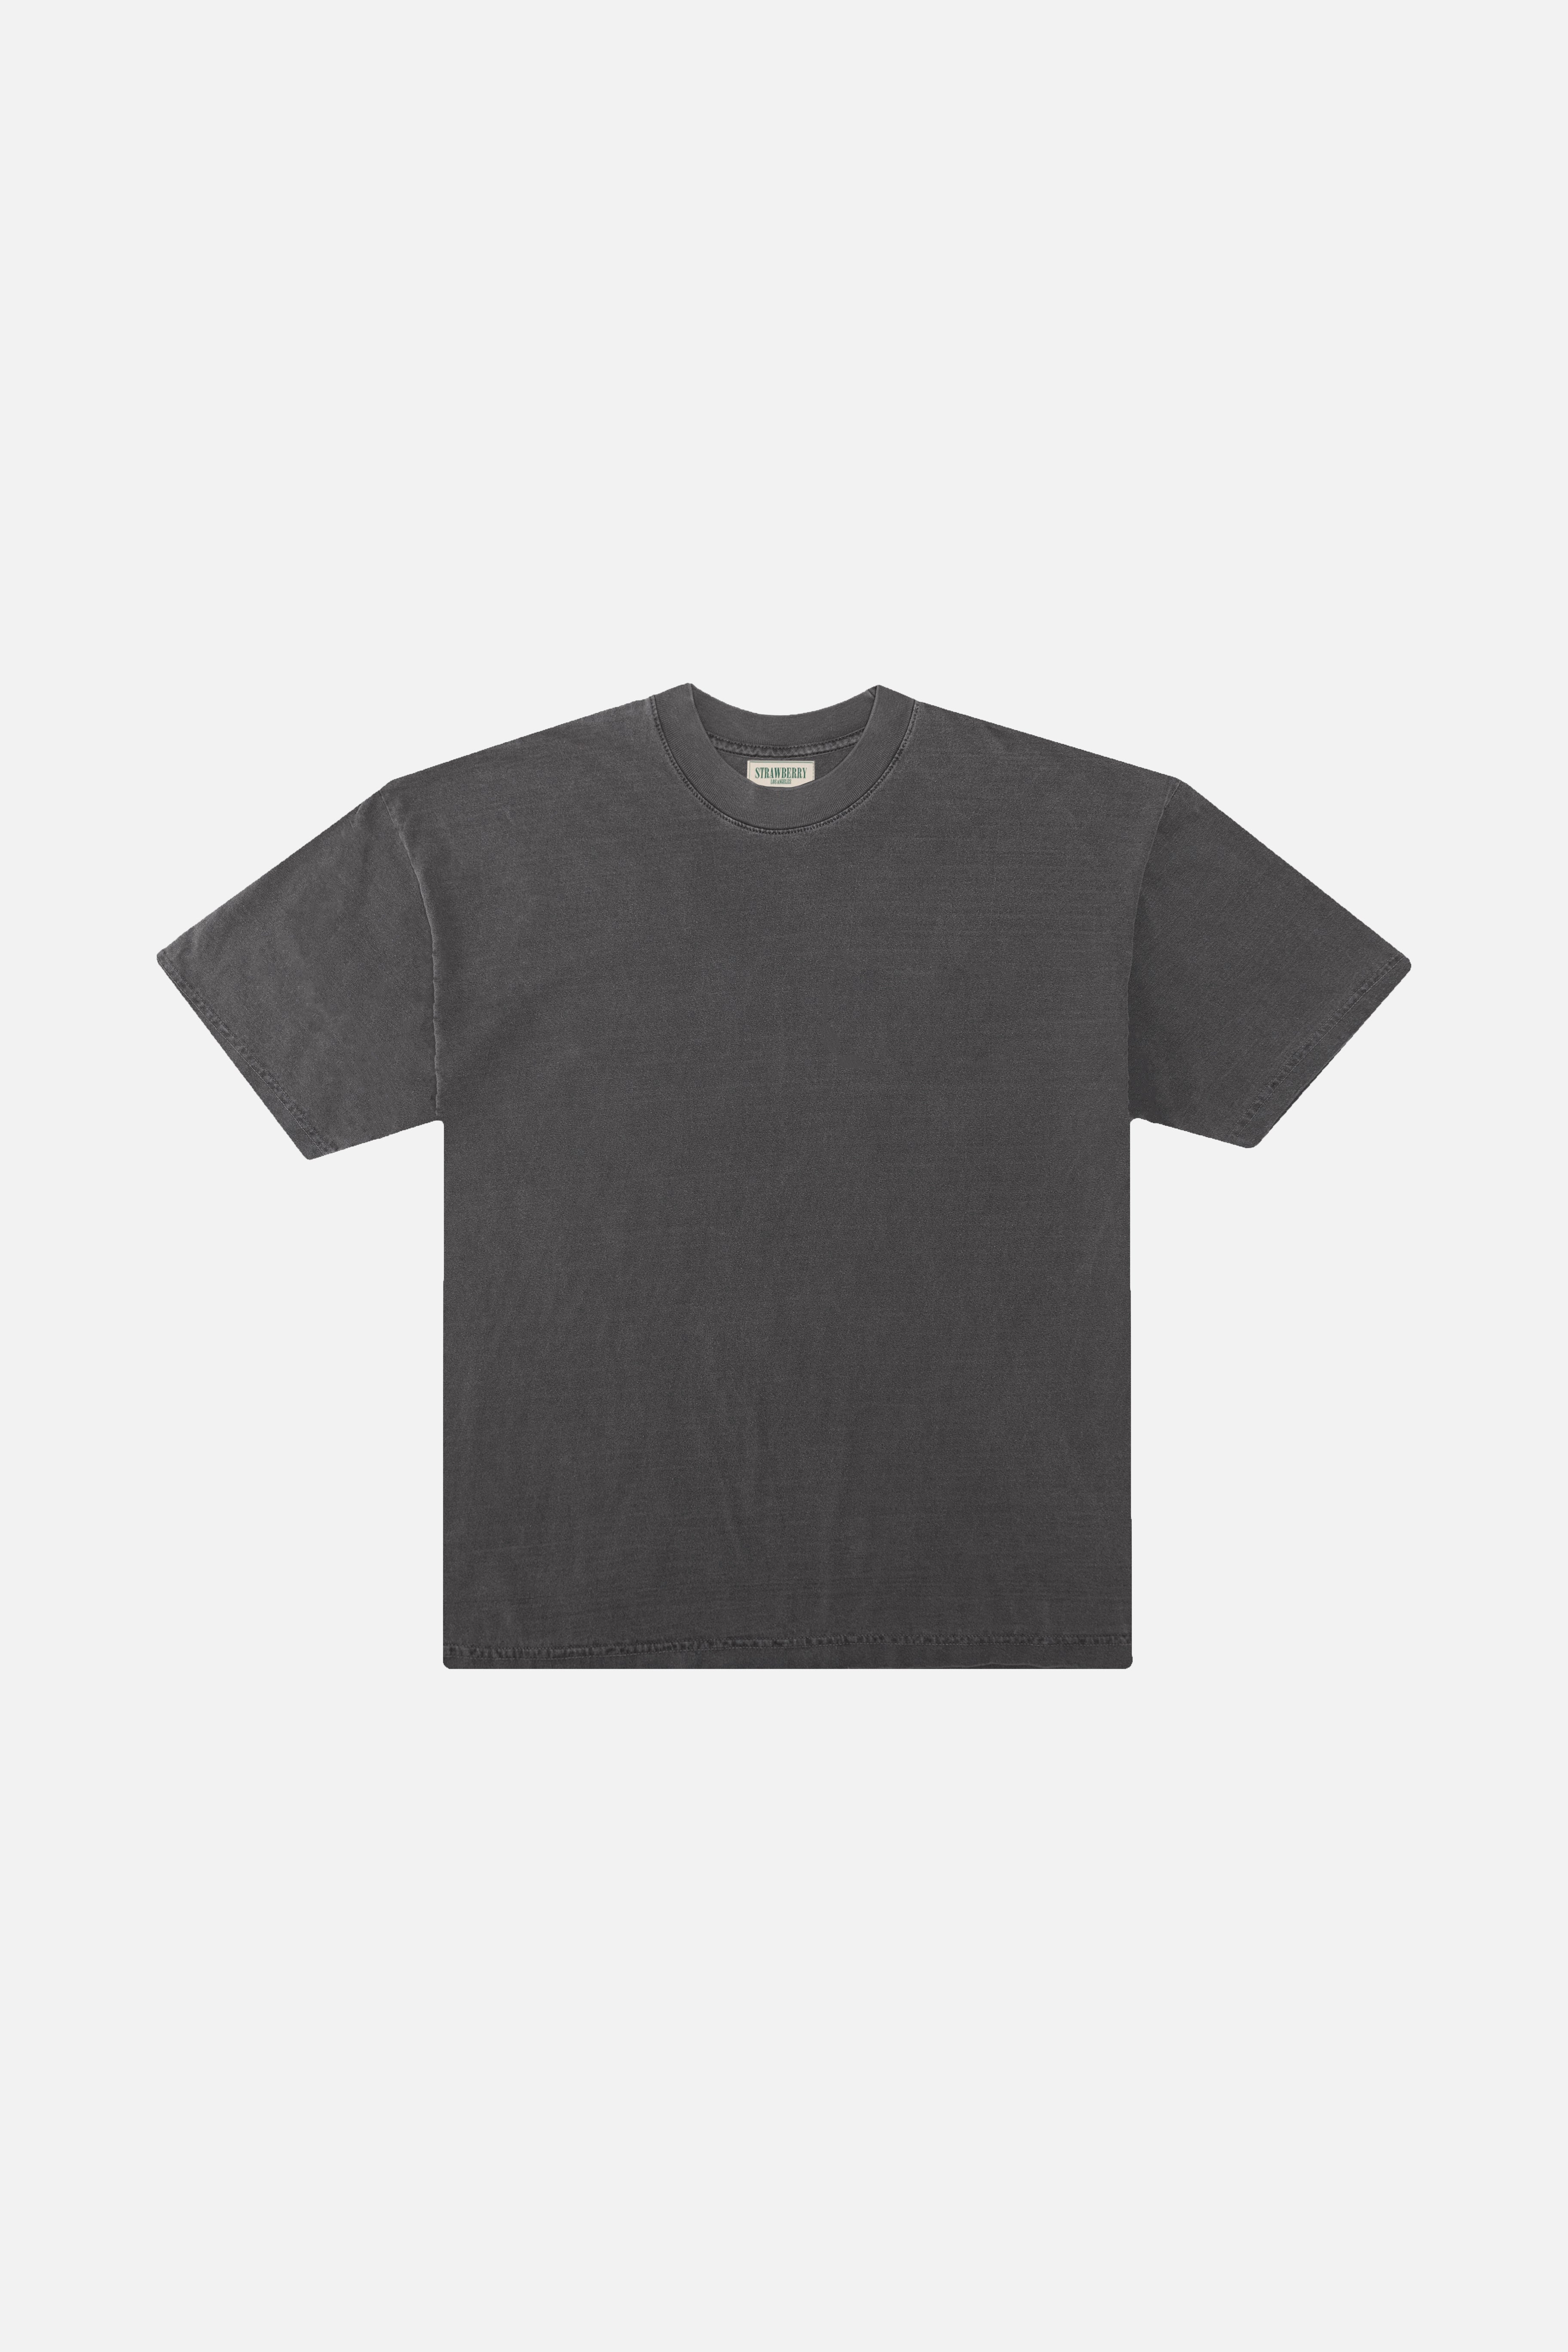 Distressed Basic T-Shirt - Vintage Black